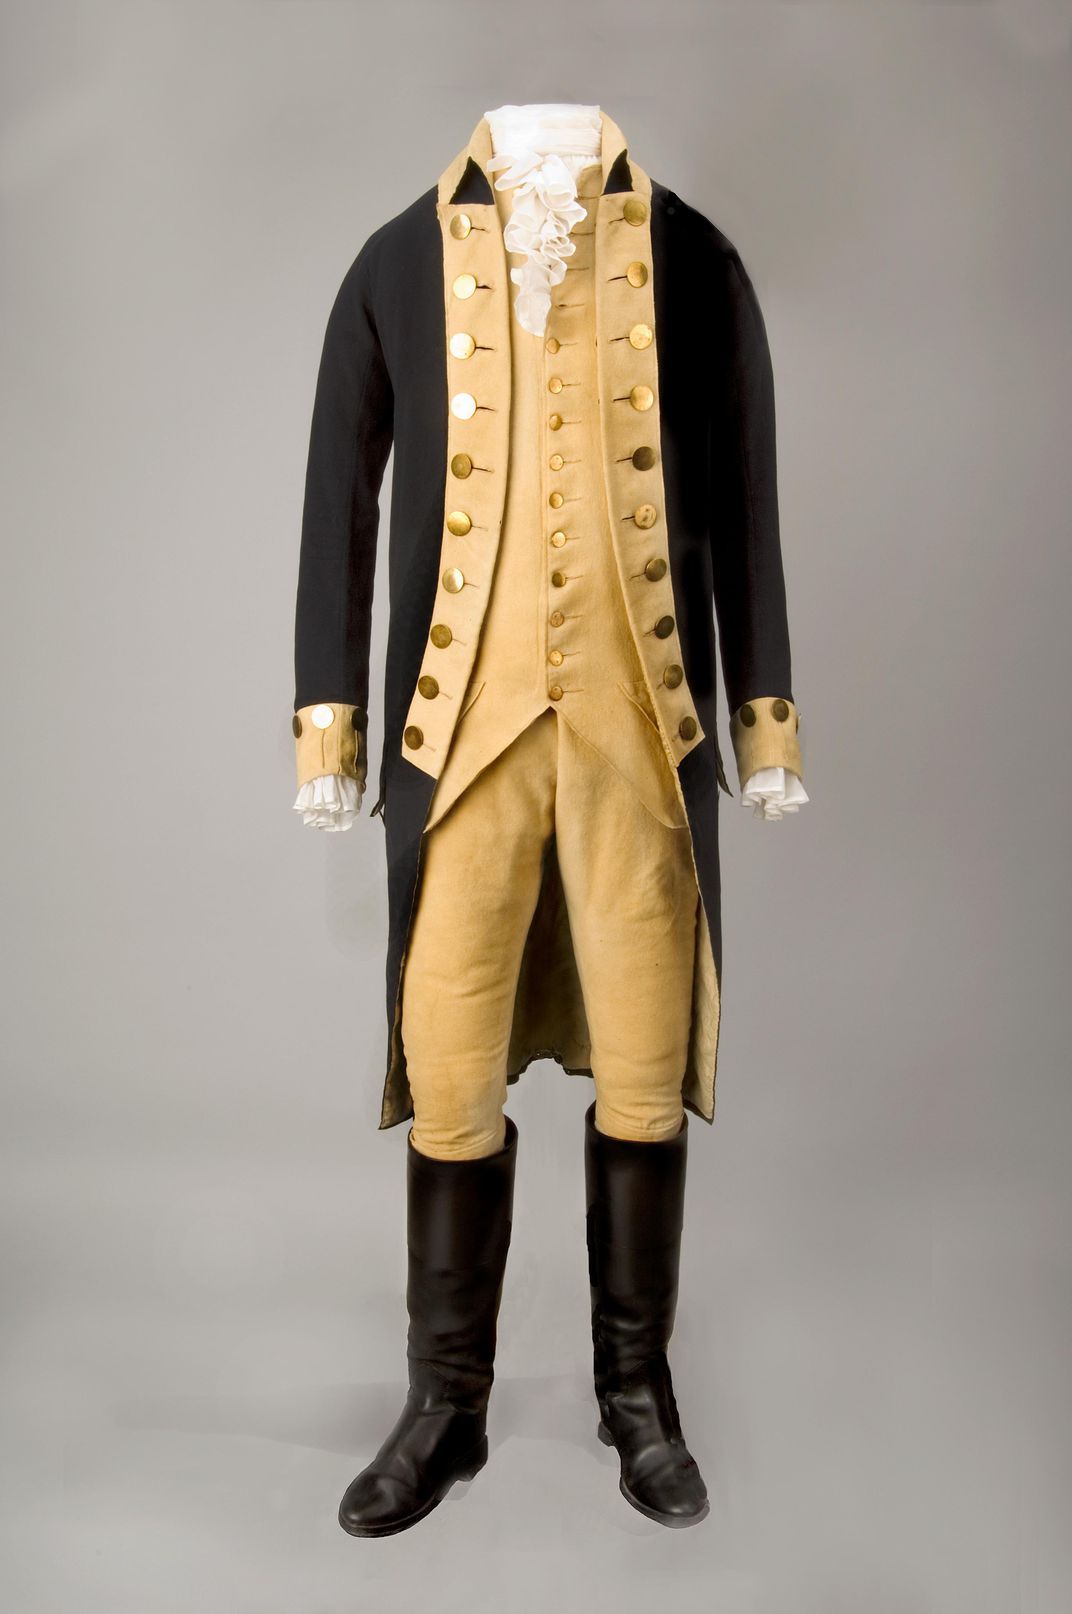 George Washington uniform